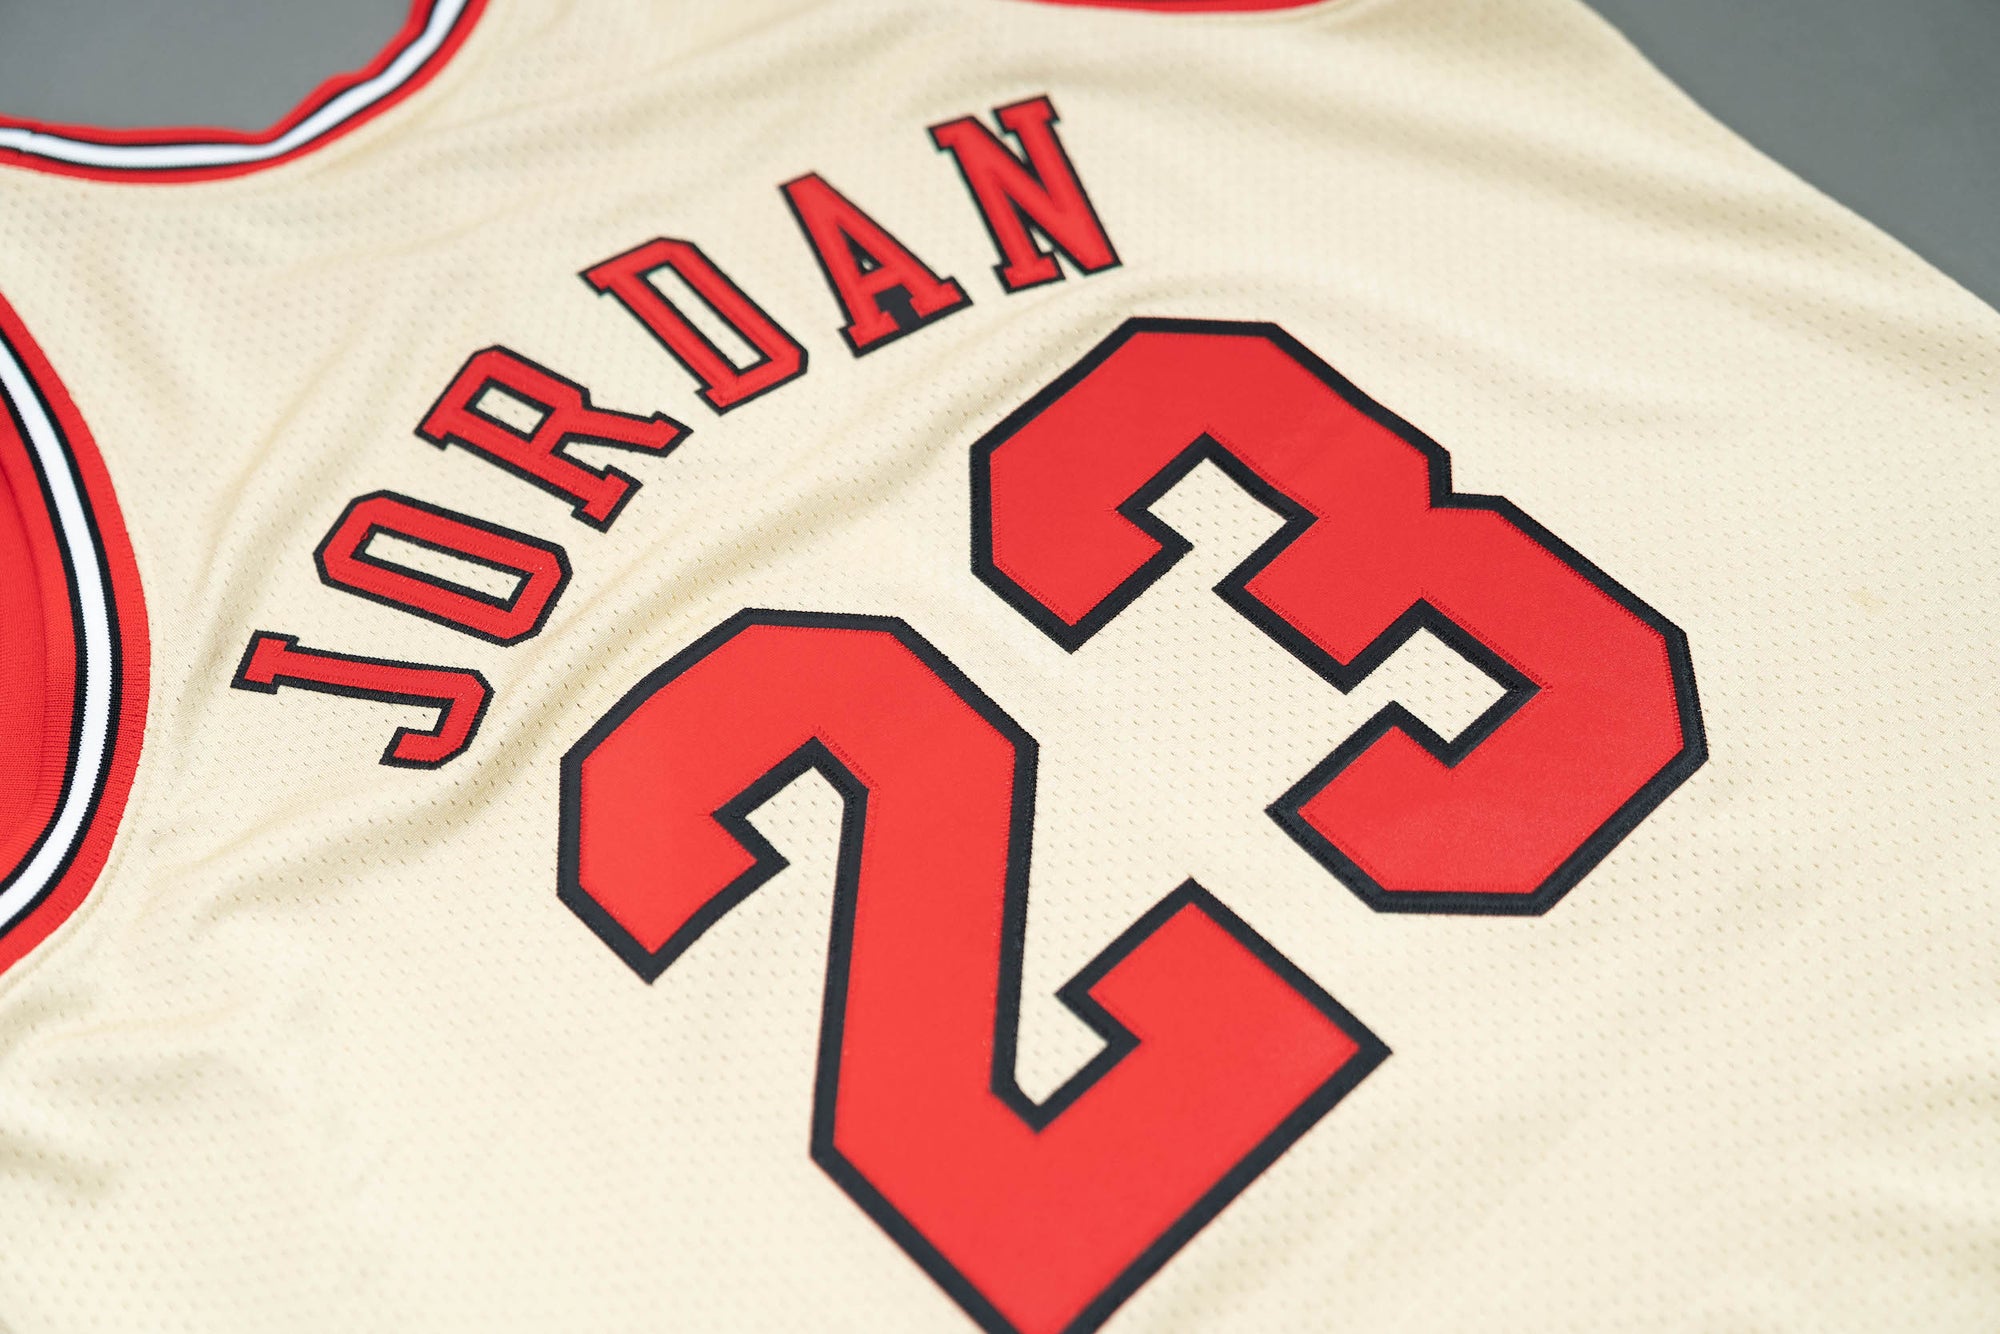 Mitchell & Ness Authentic Michael Jordan Chicago Bulls NBA 1995-96 Jersey Black / S